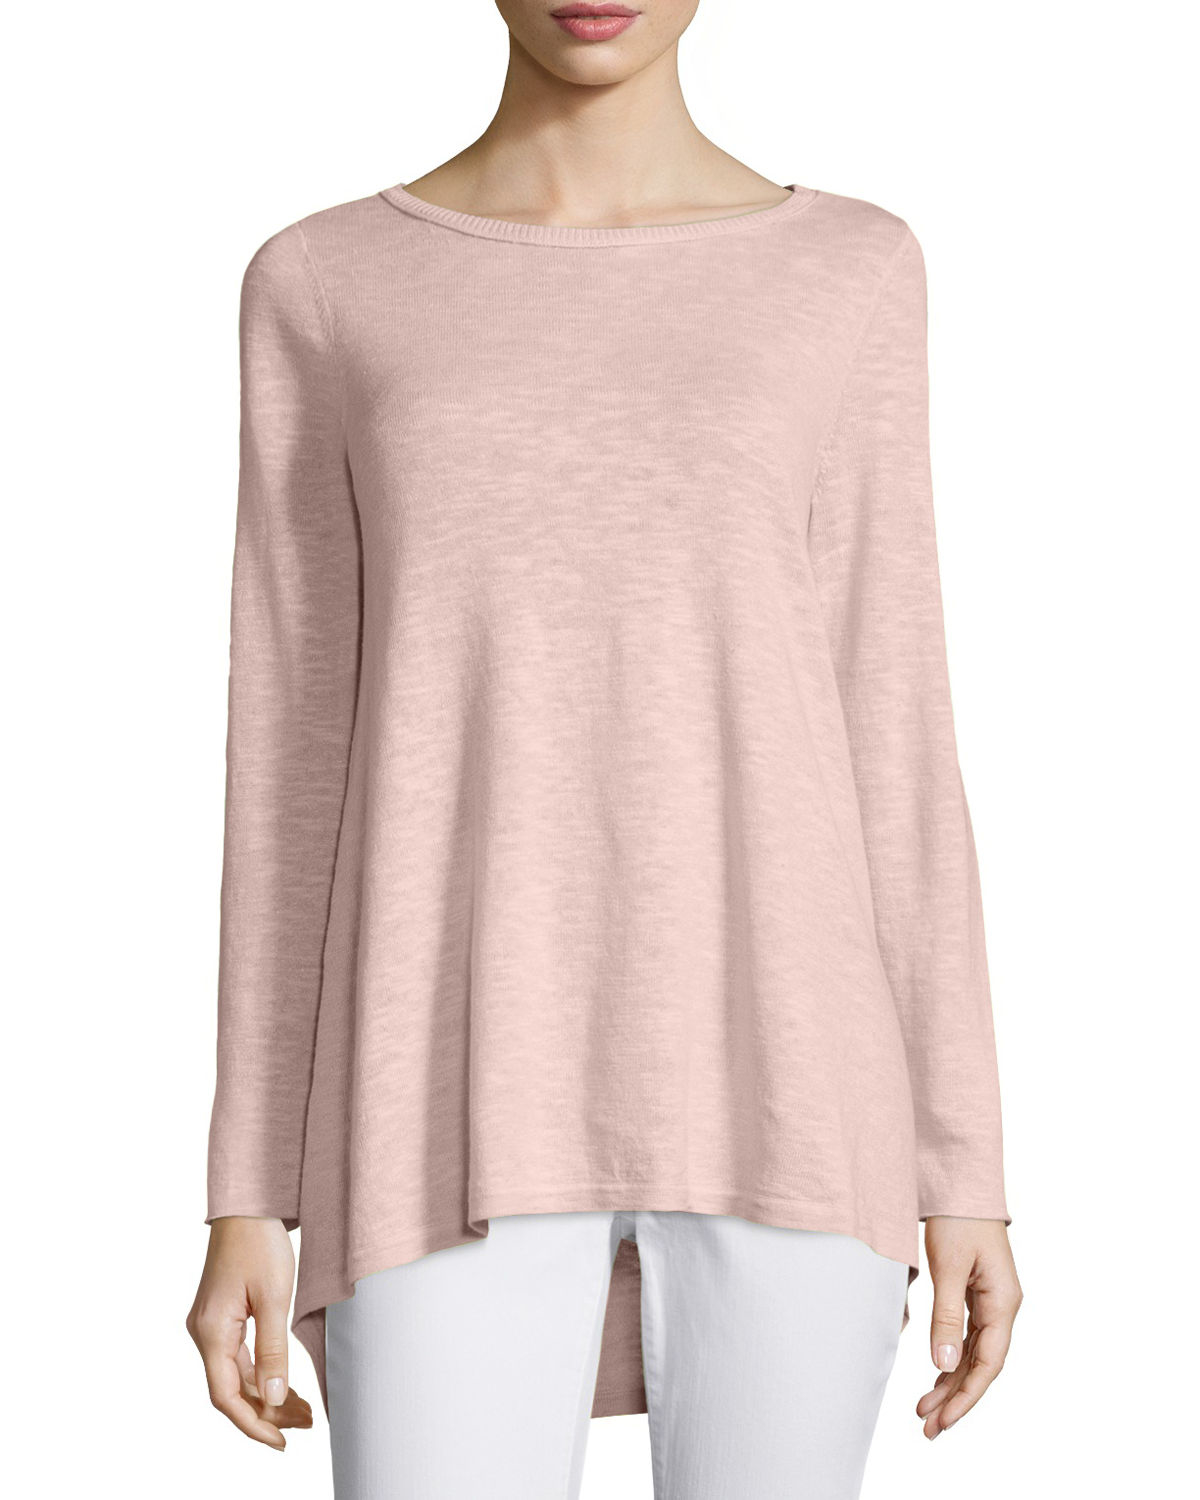 Lyst - Eileen Fisher Long-sleeve Organic Slub Top in Pink